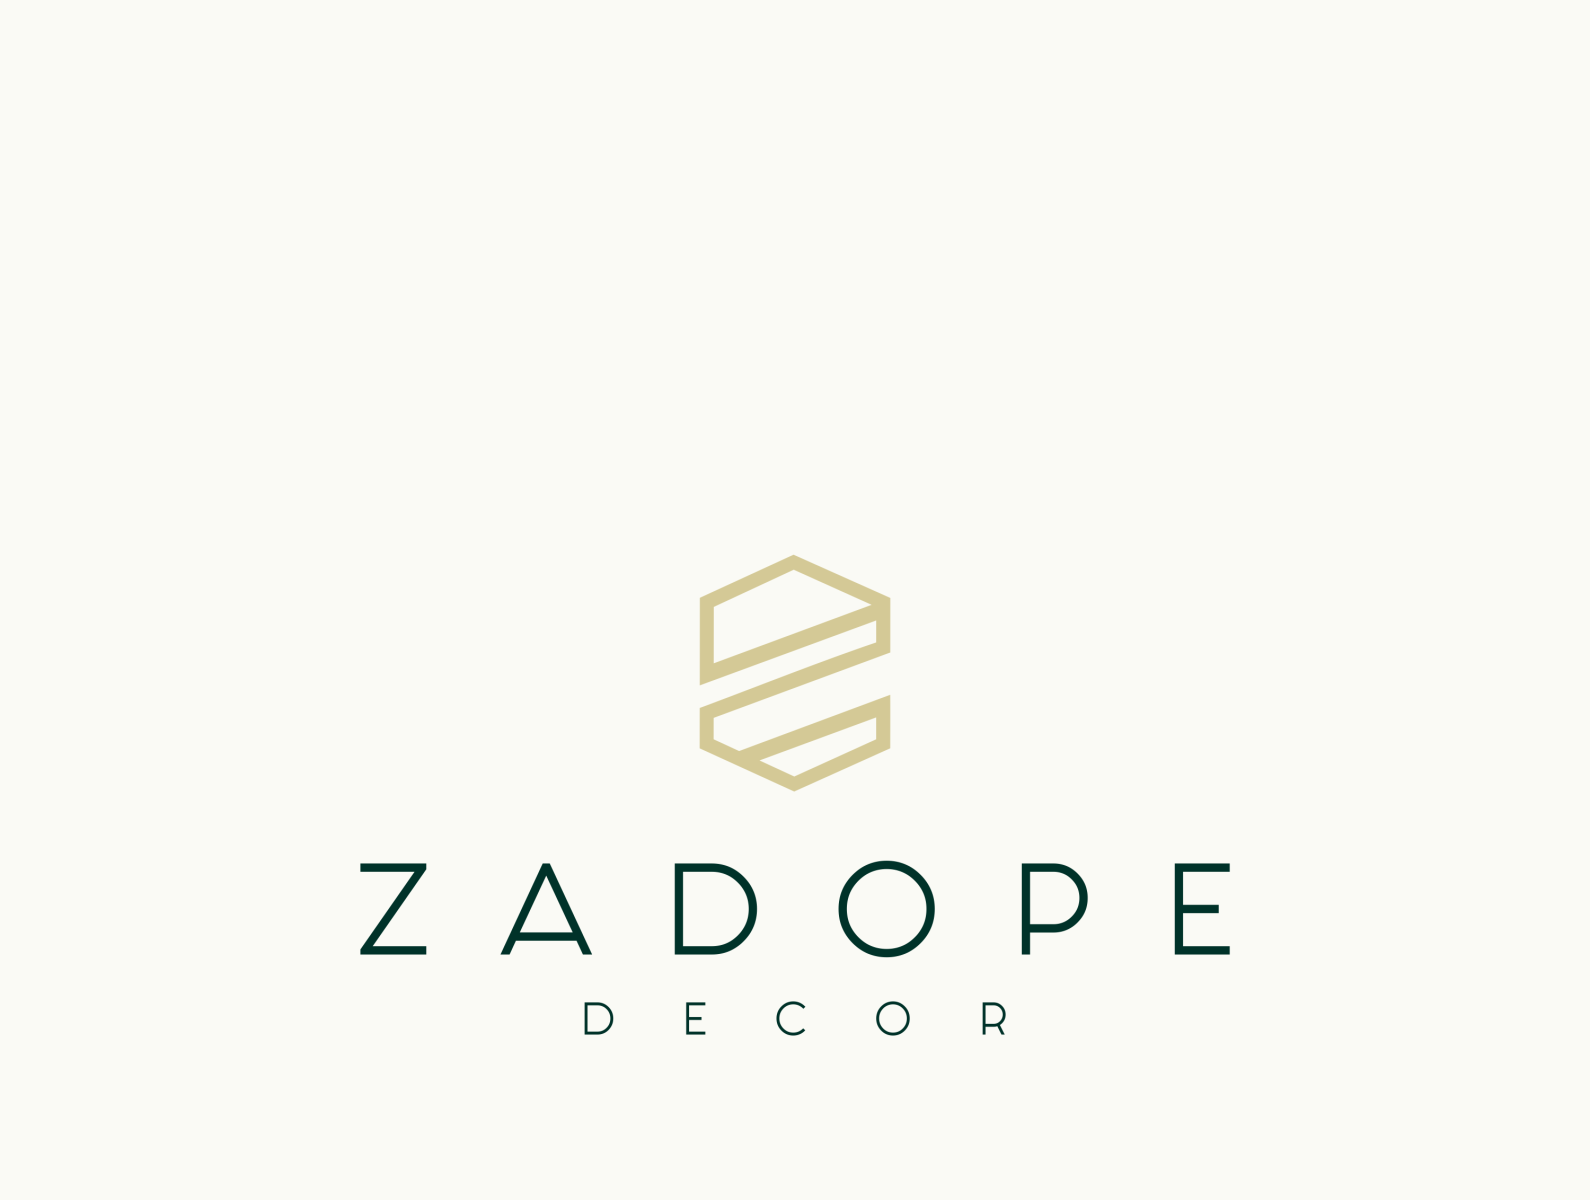 Zadope Decor Brand logo design by Orange studio on Dribbble